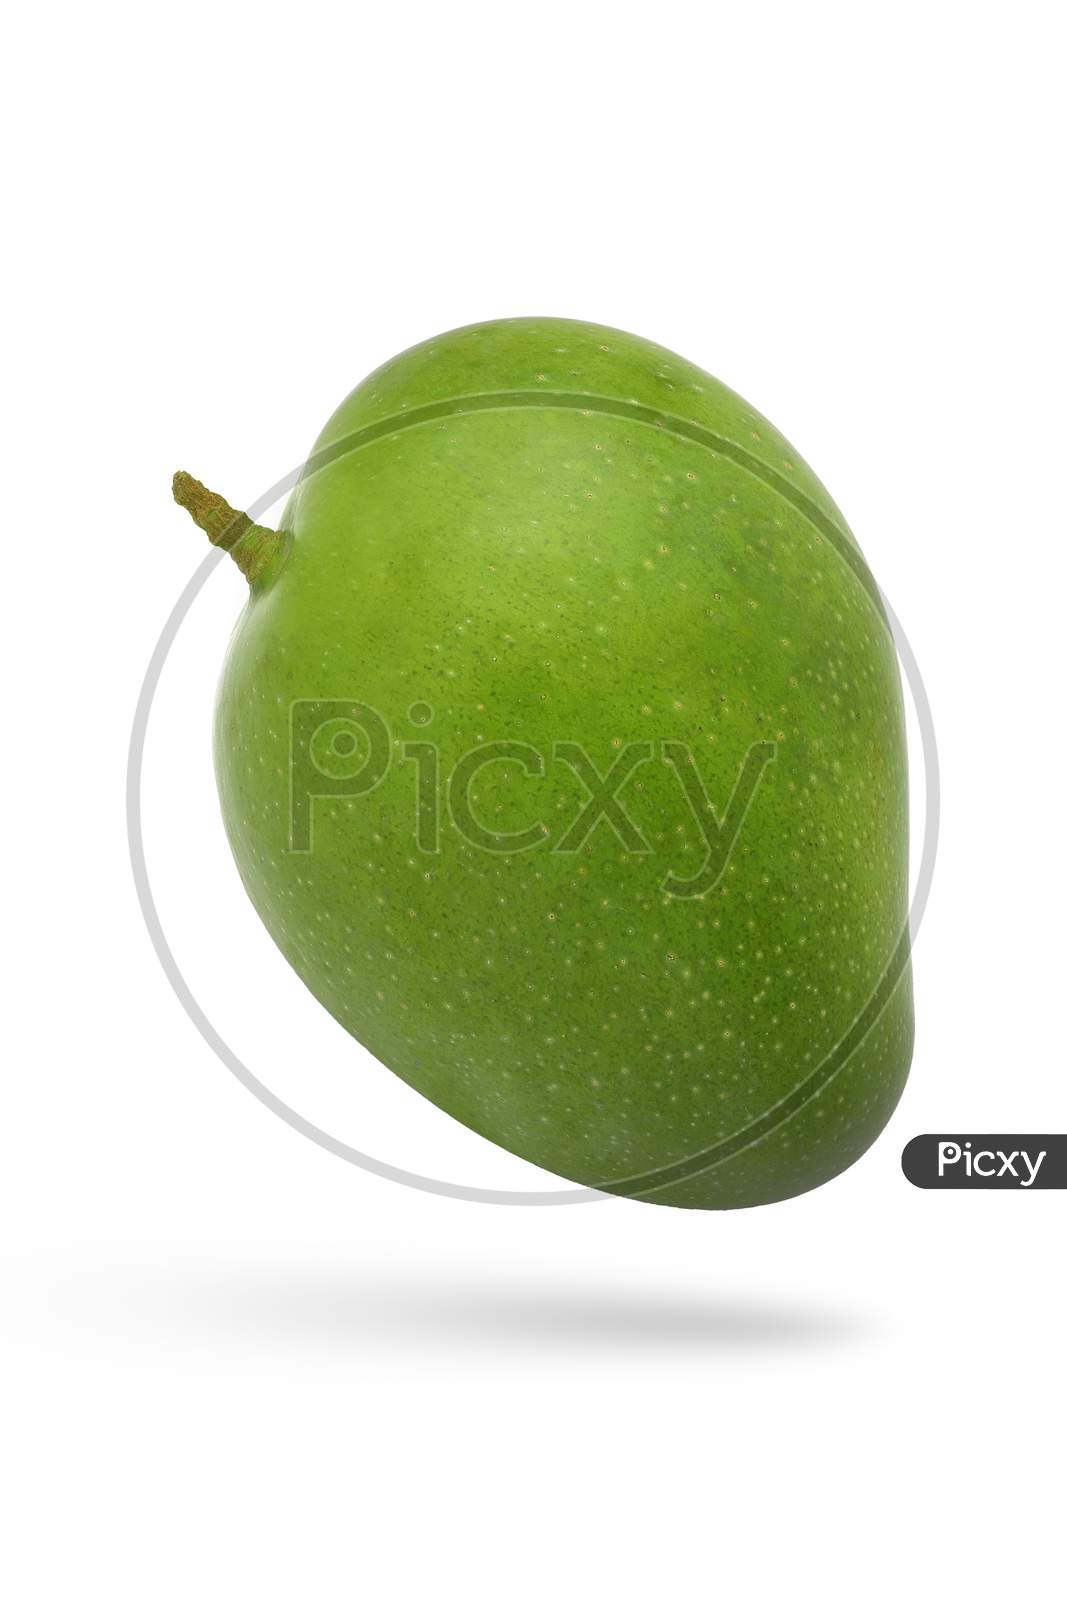 green mango clipart